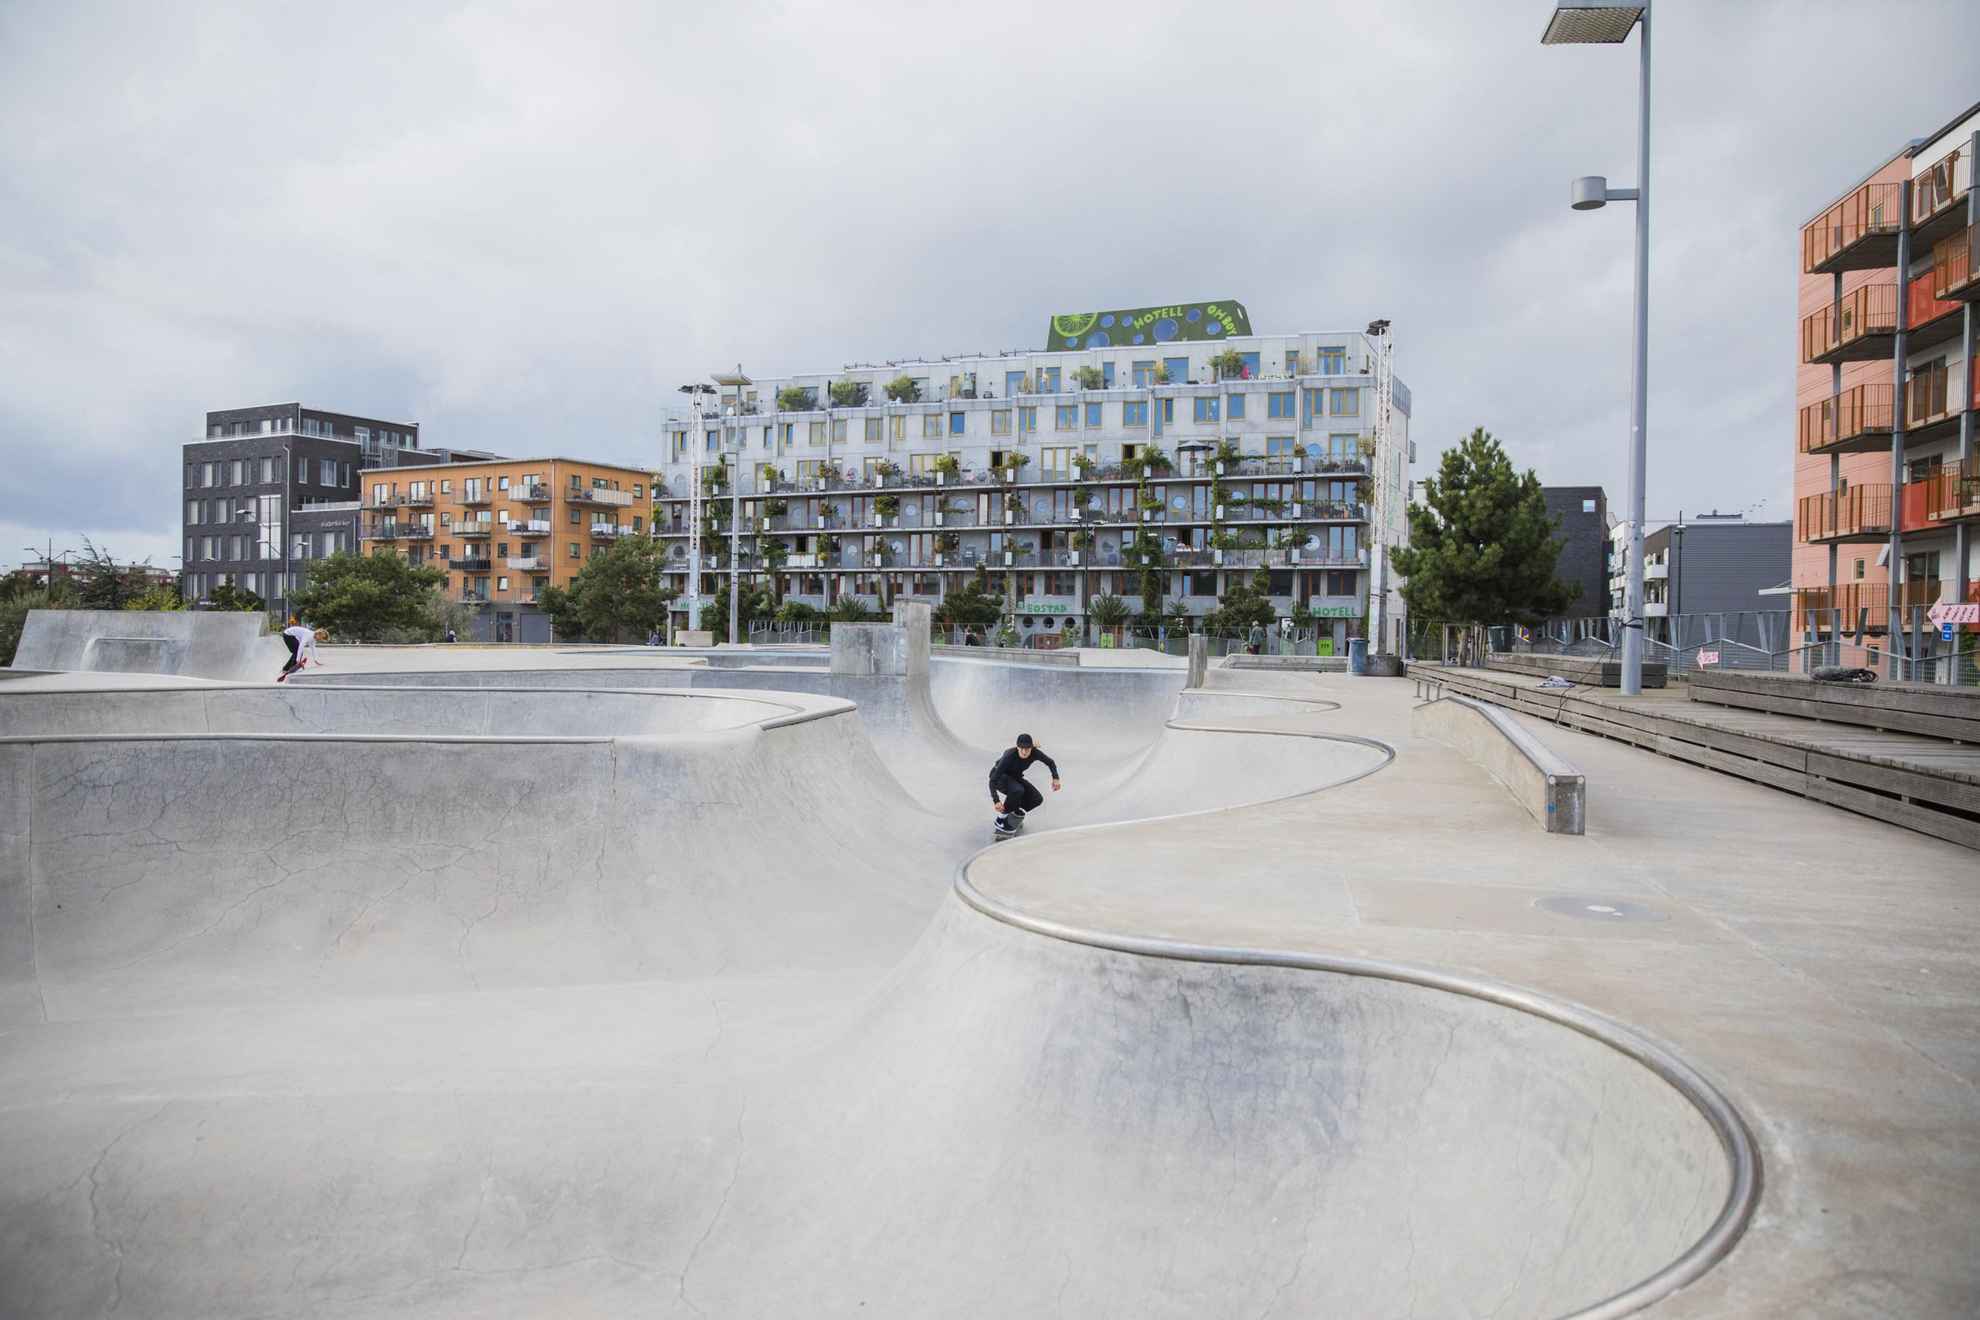 Skateboarding Park in Malmö